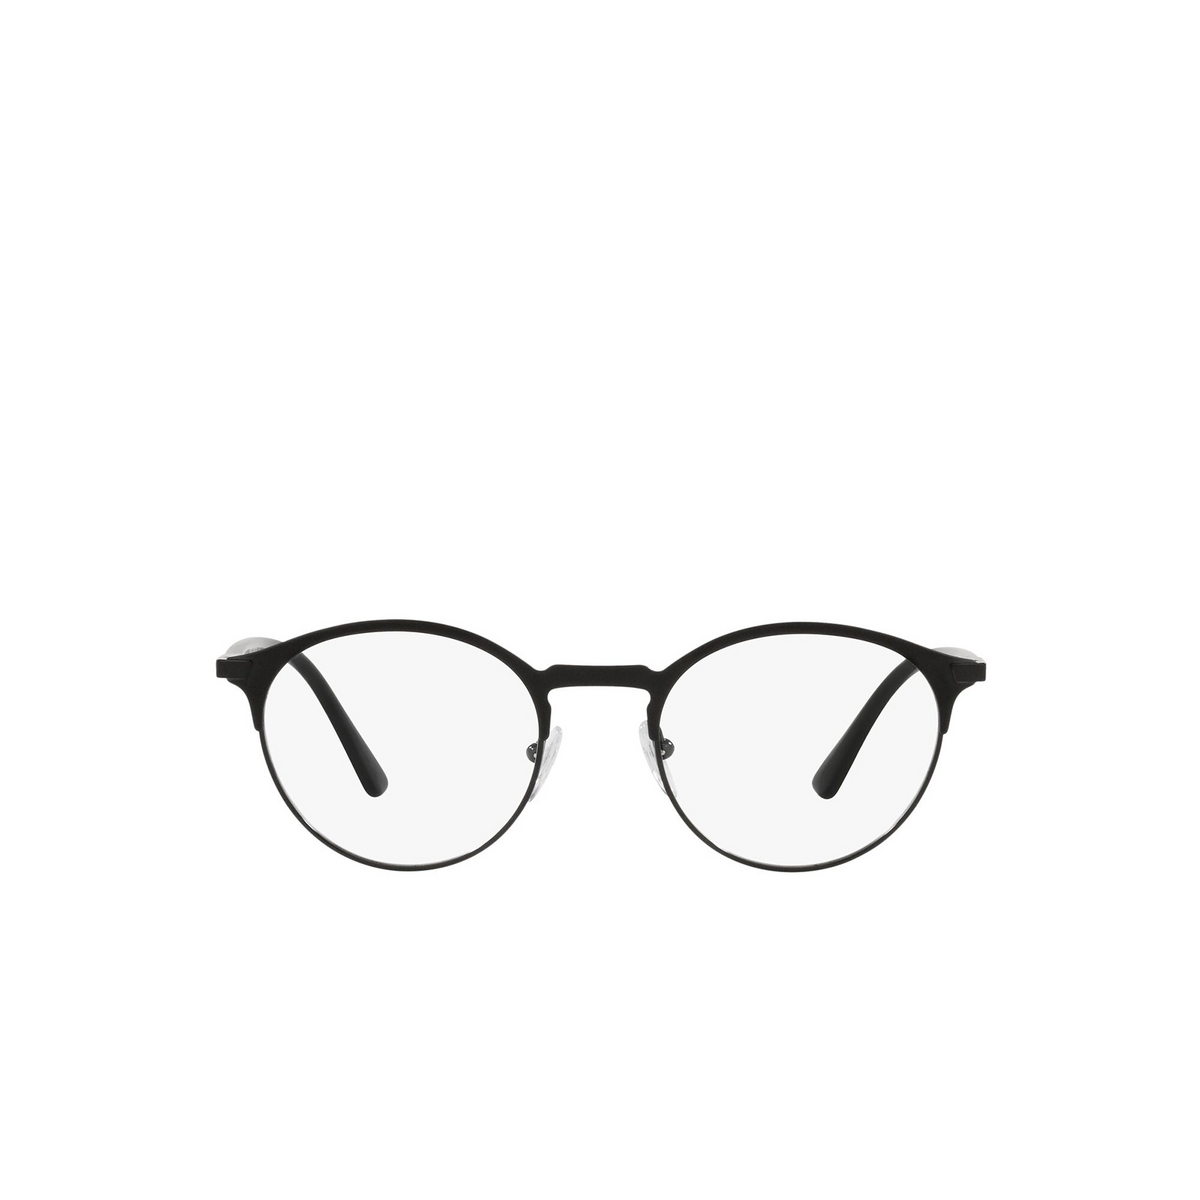 Prada® Round Eyeglasses: PR 58YV color Black 07F1O1 - front view.